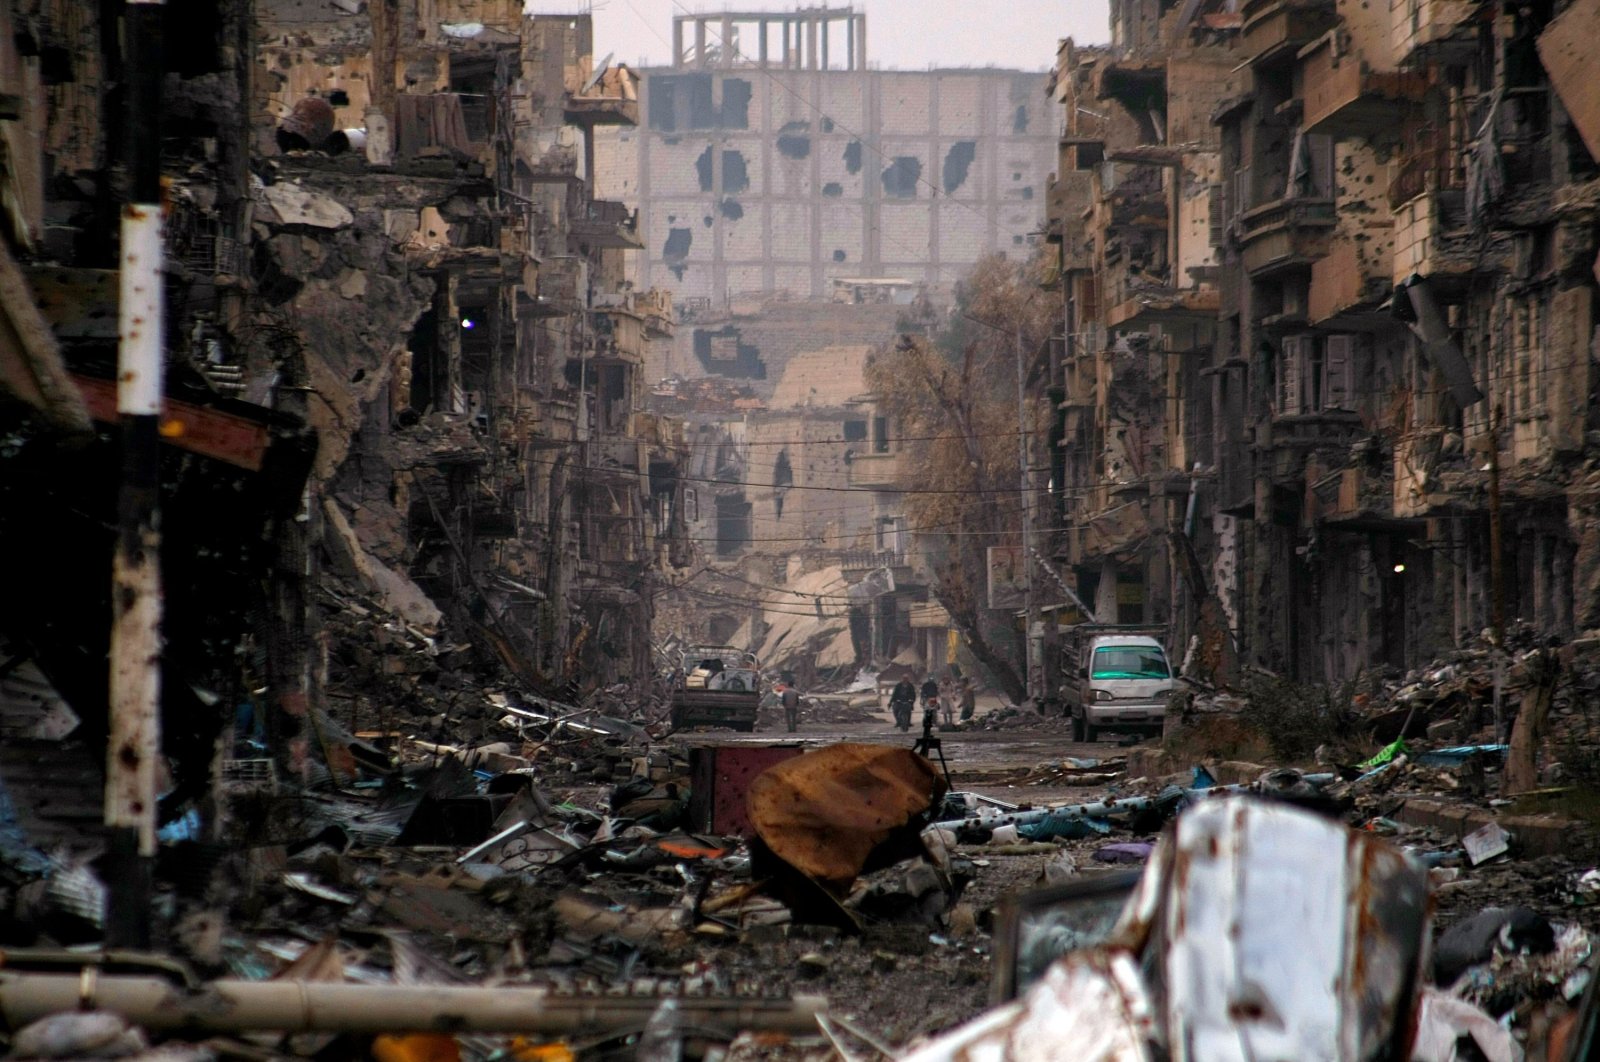 Pencairan Suriah seharusnya tidak bertentangan dengan kenyataan